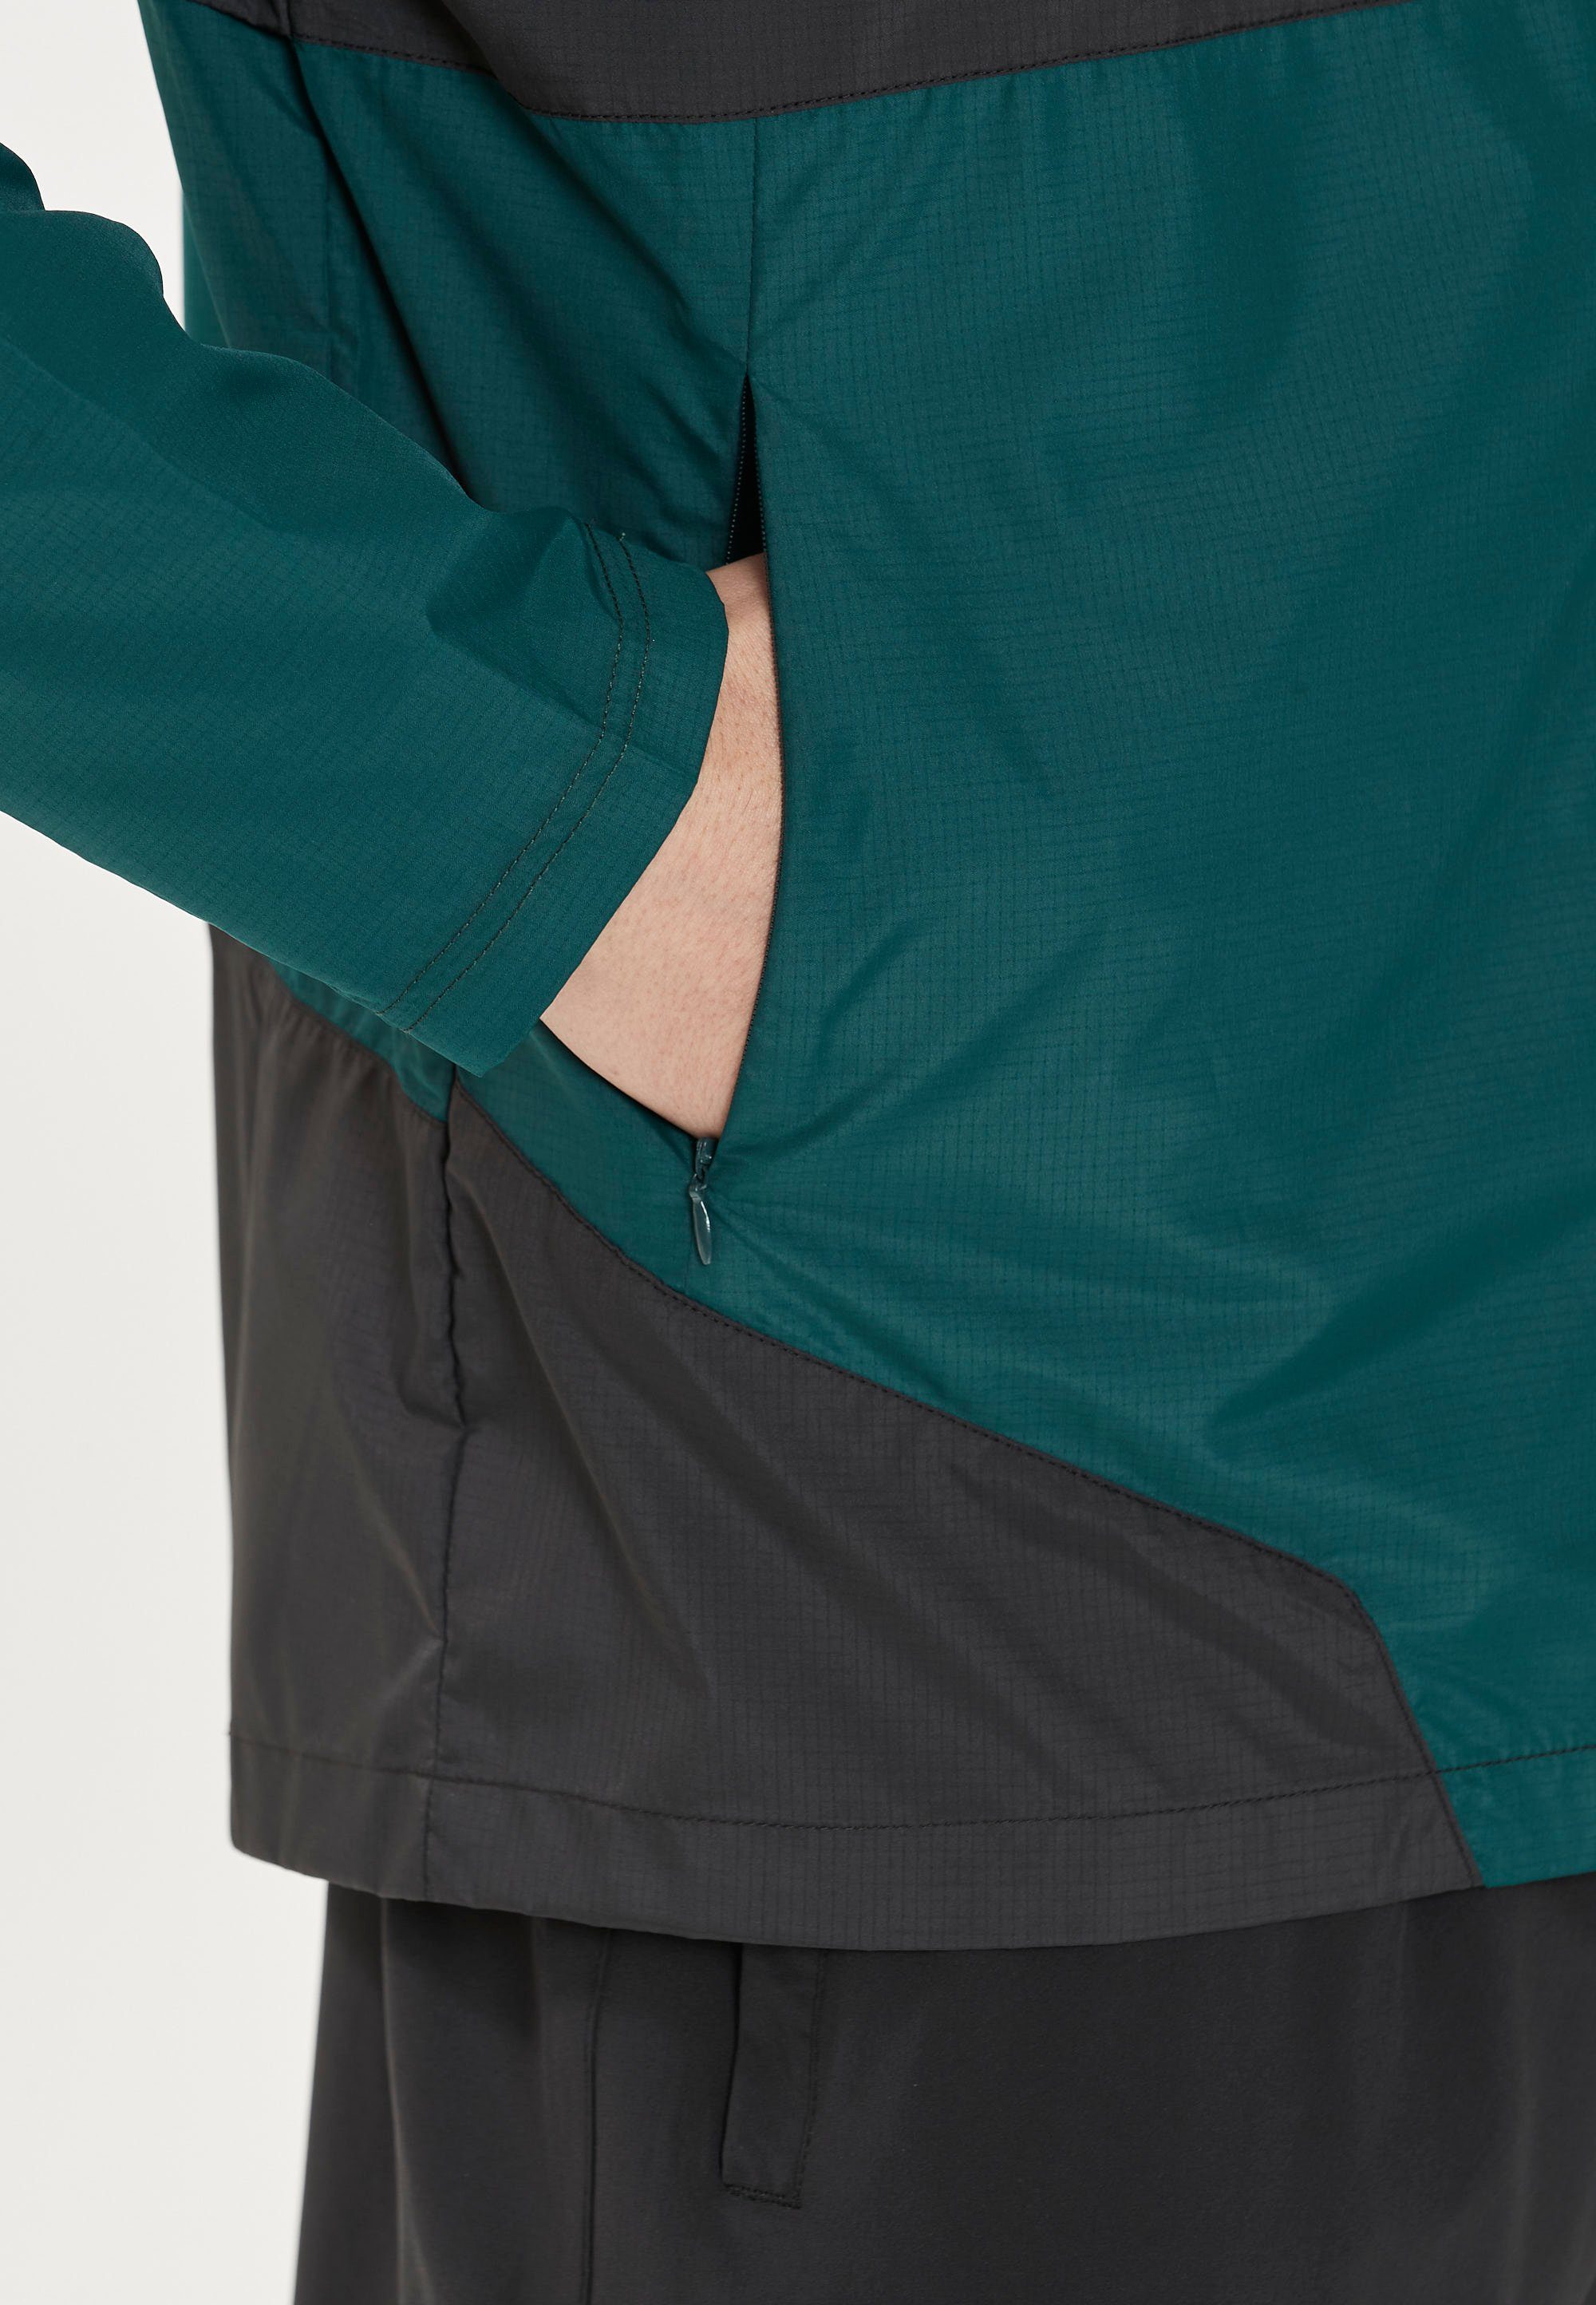 mit ENDURANCE dunkelgrün M Details Jacket Laufjacke Functional reflektierenden NOVANT